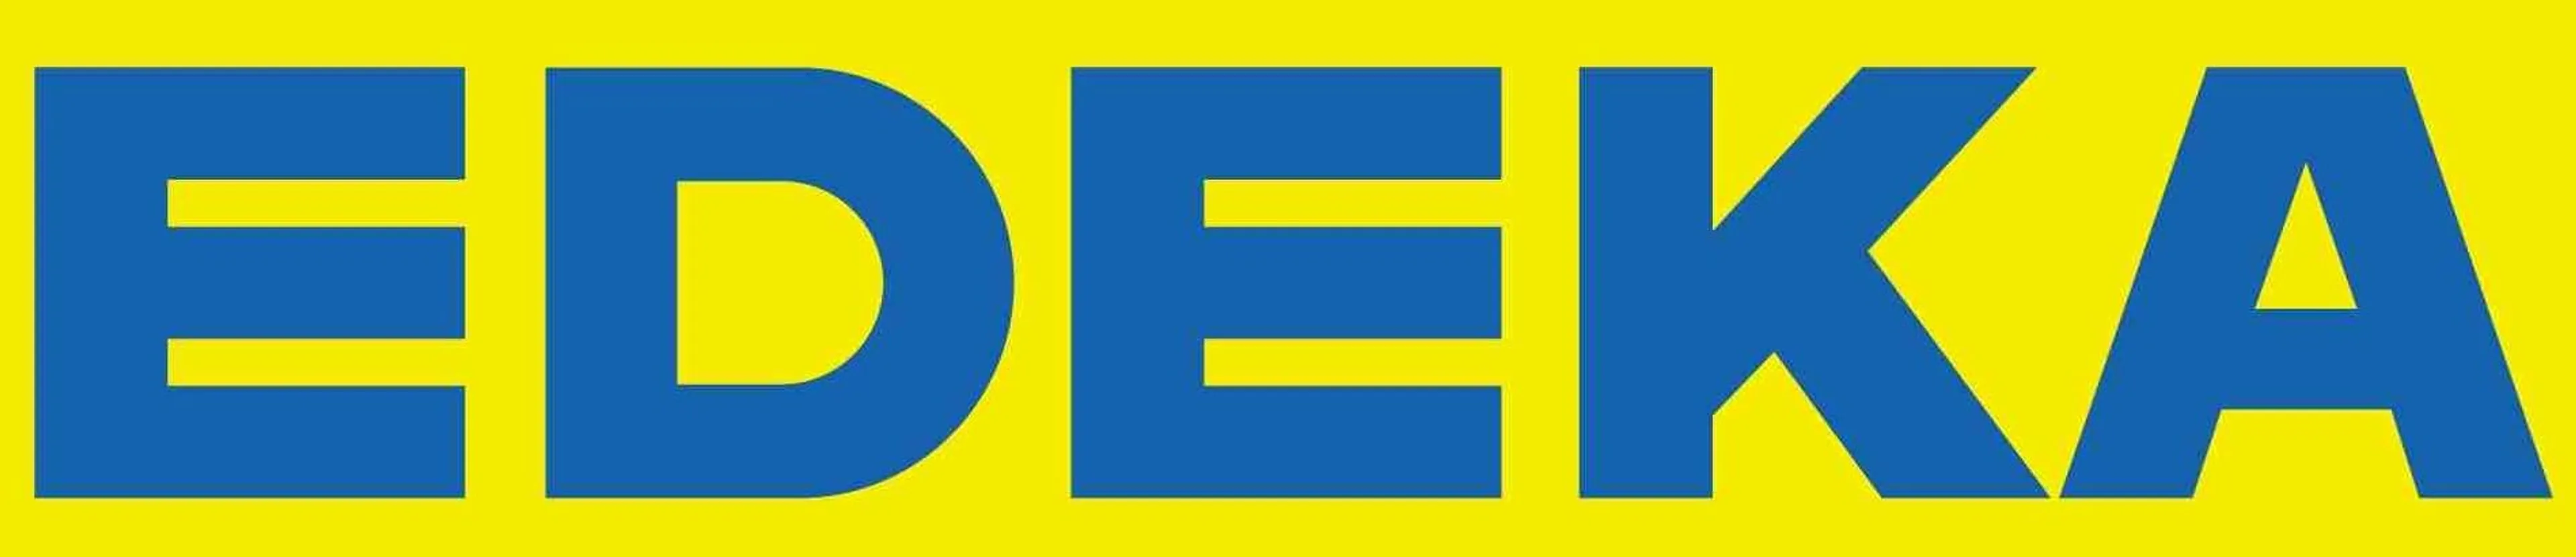 EDEKA logo